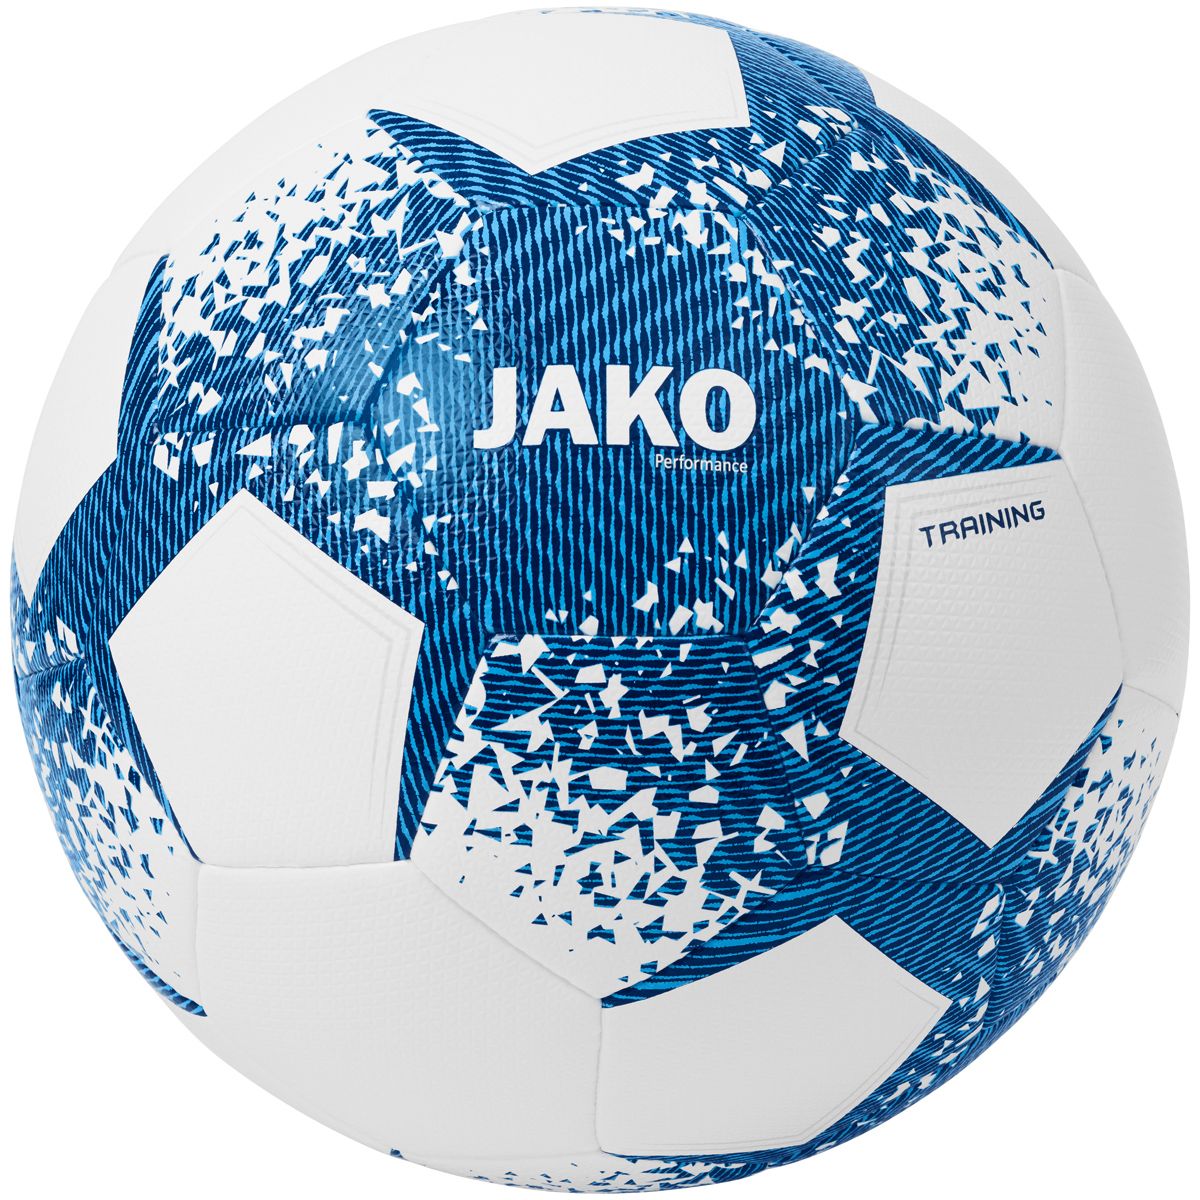 Trainingsball Primera weiß/JAKO blau/navy 5